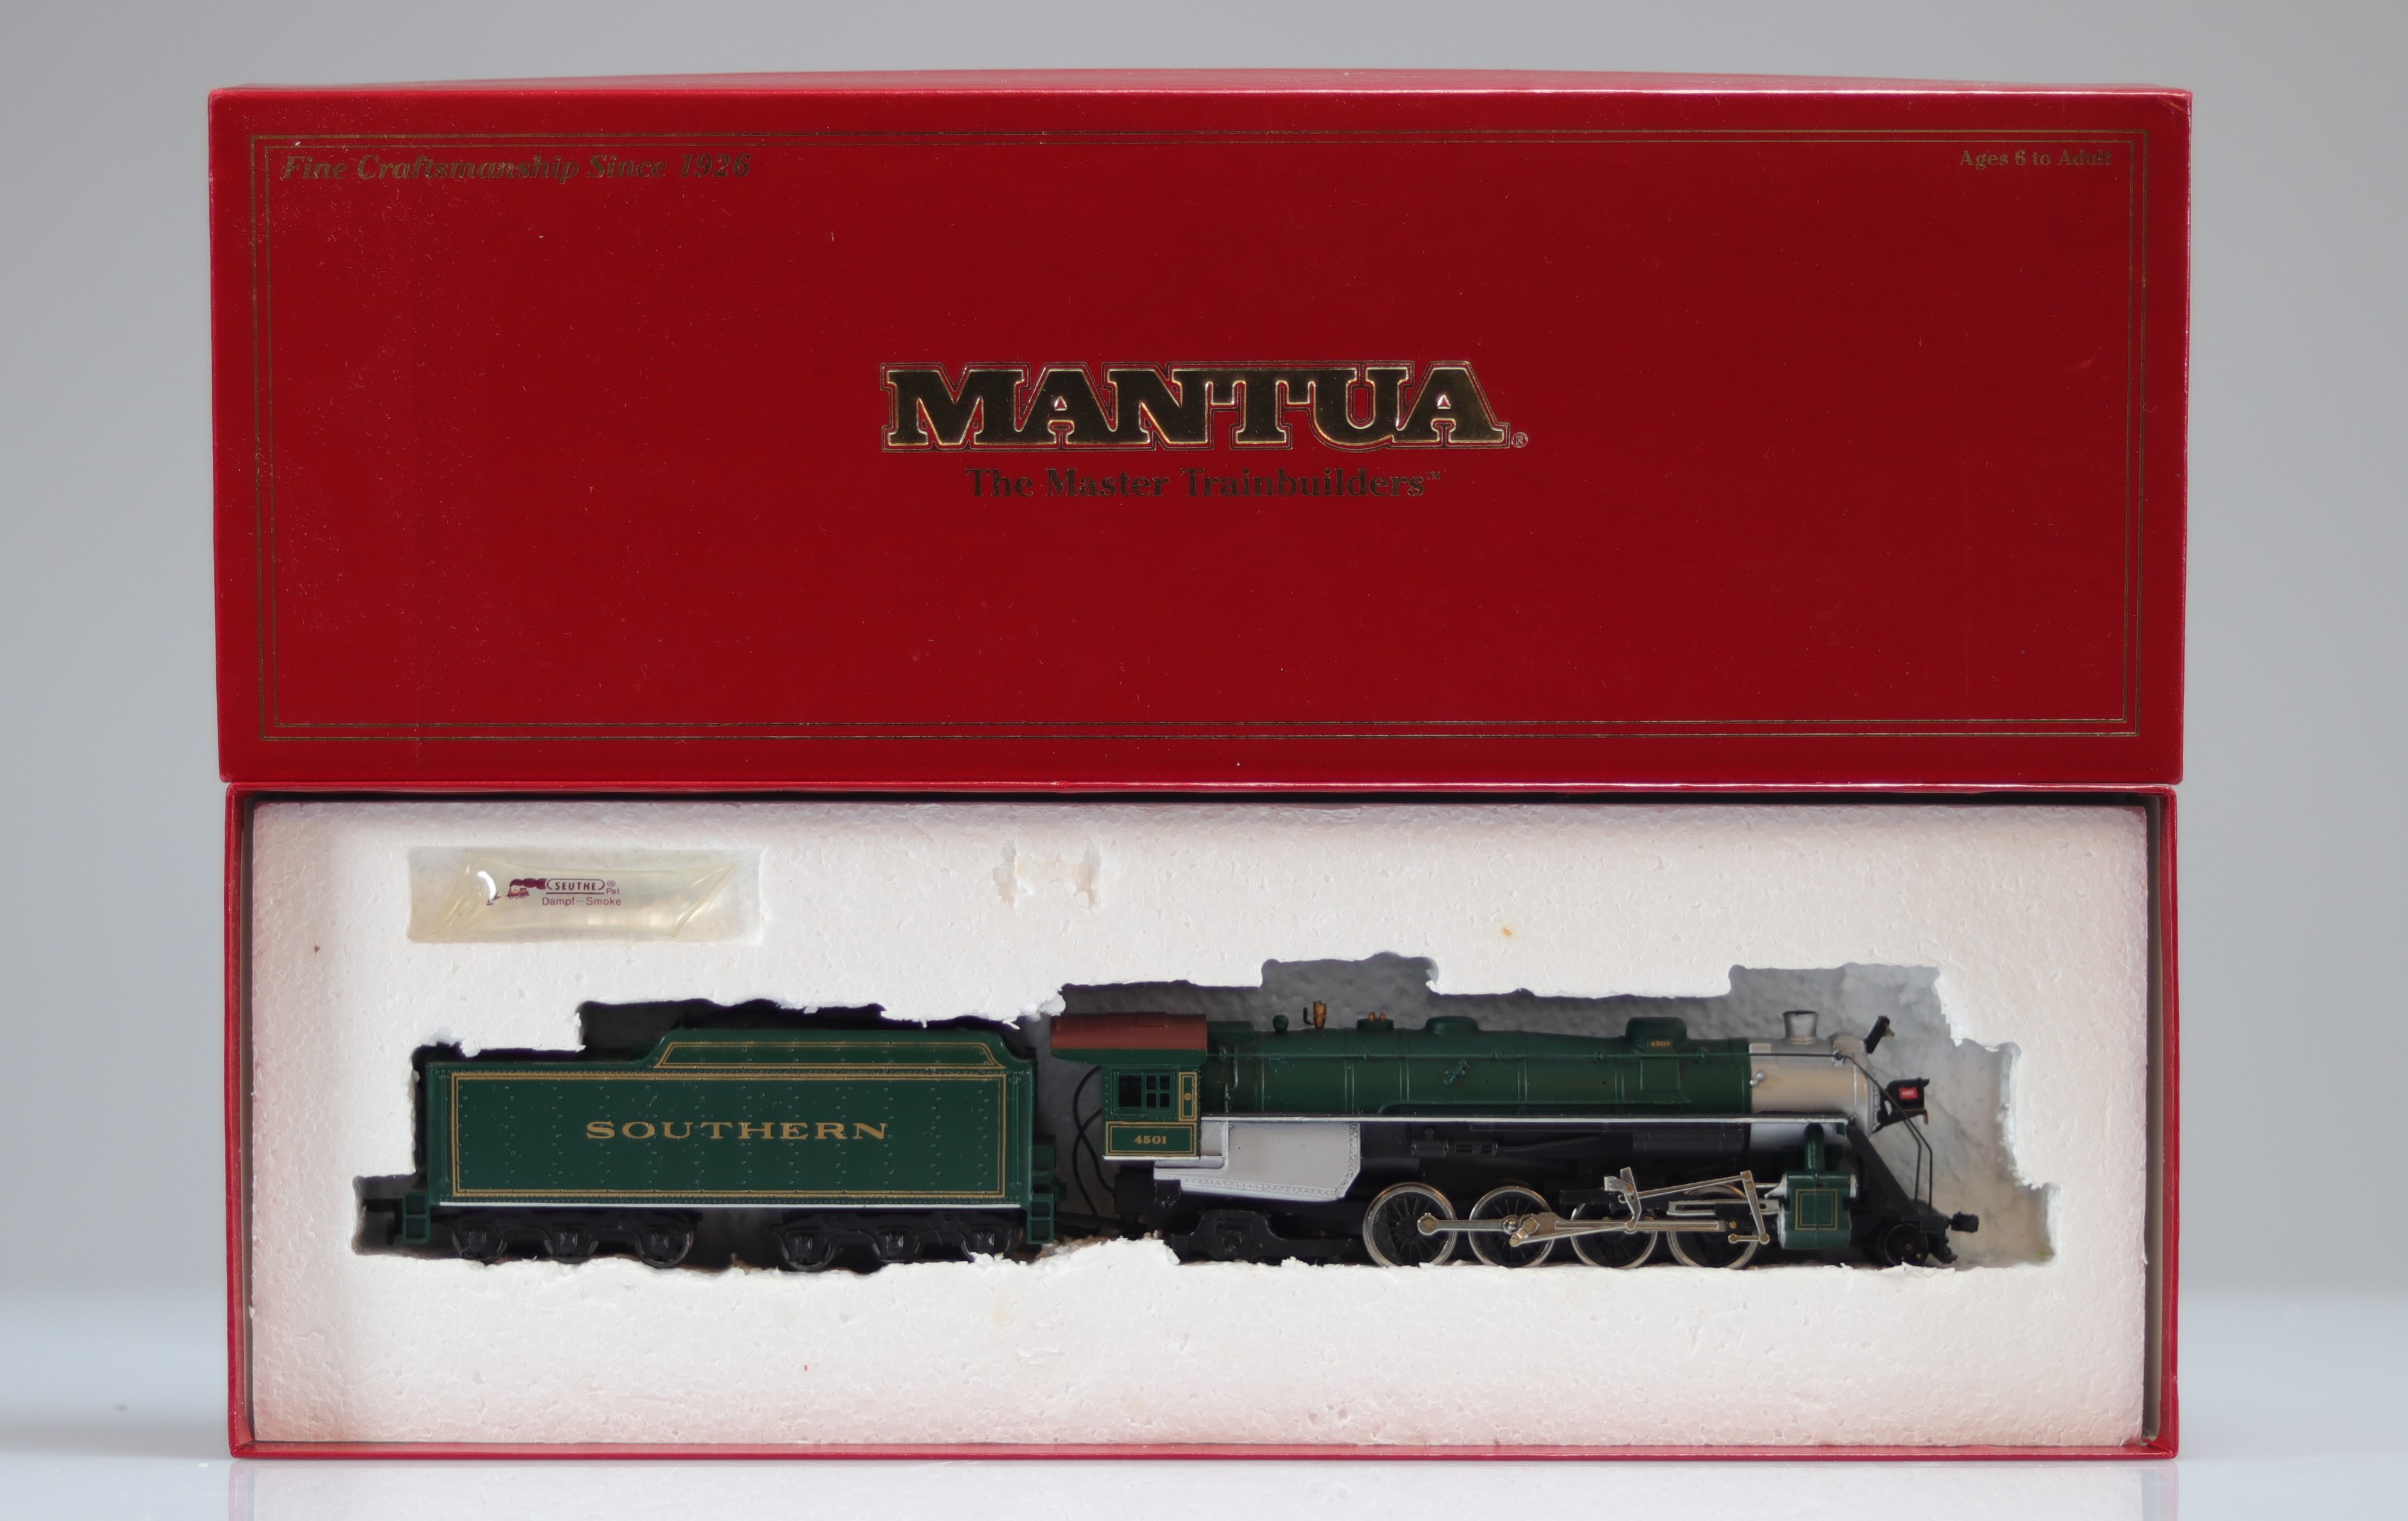 Mantua locomotive / Reference: 386 040 / Type: 1.4.14501 (Mikado)